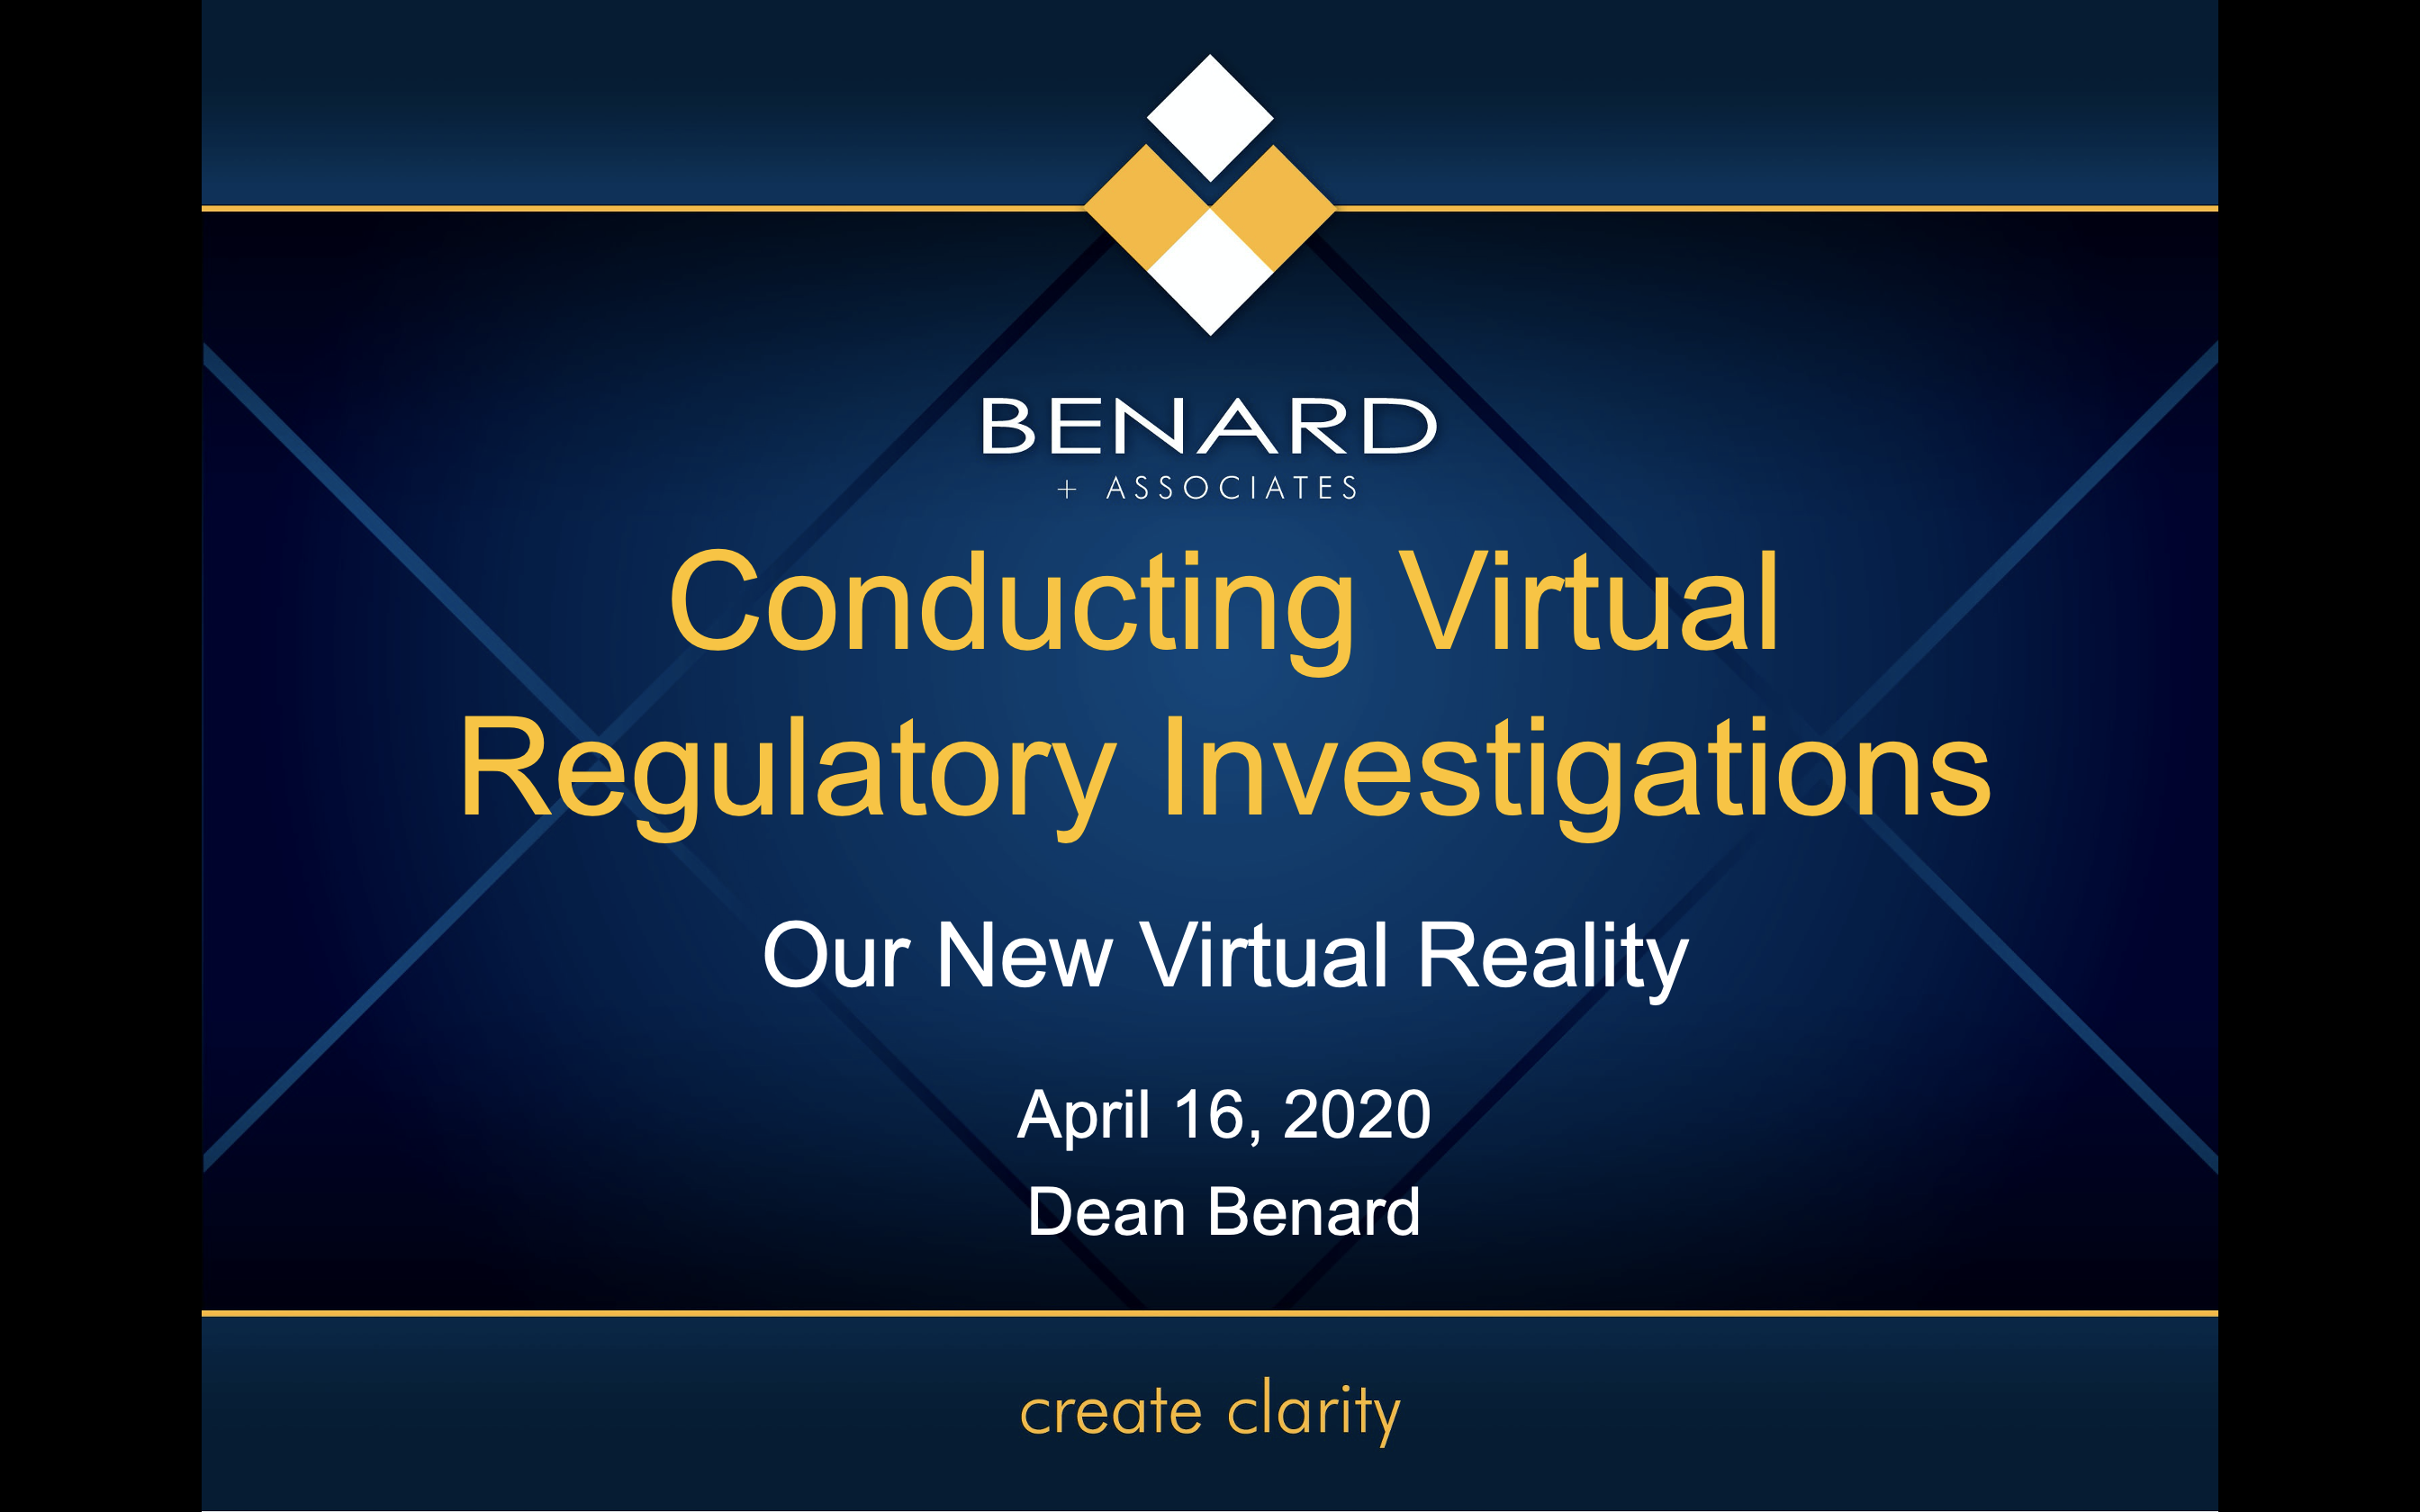 Conducting Investigations Virtually - Benard & Associates